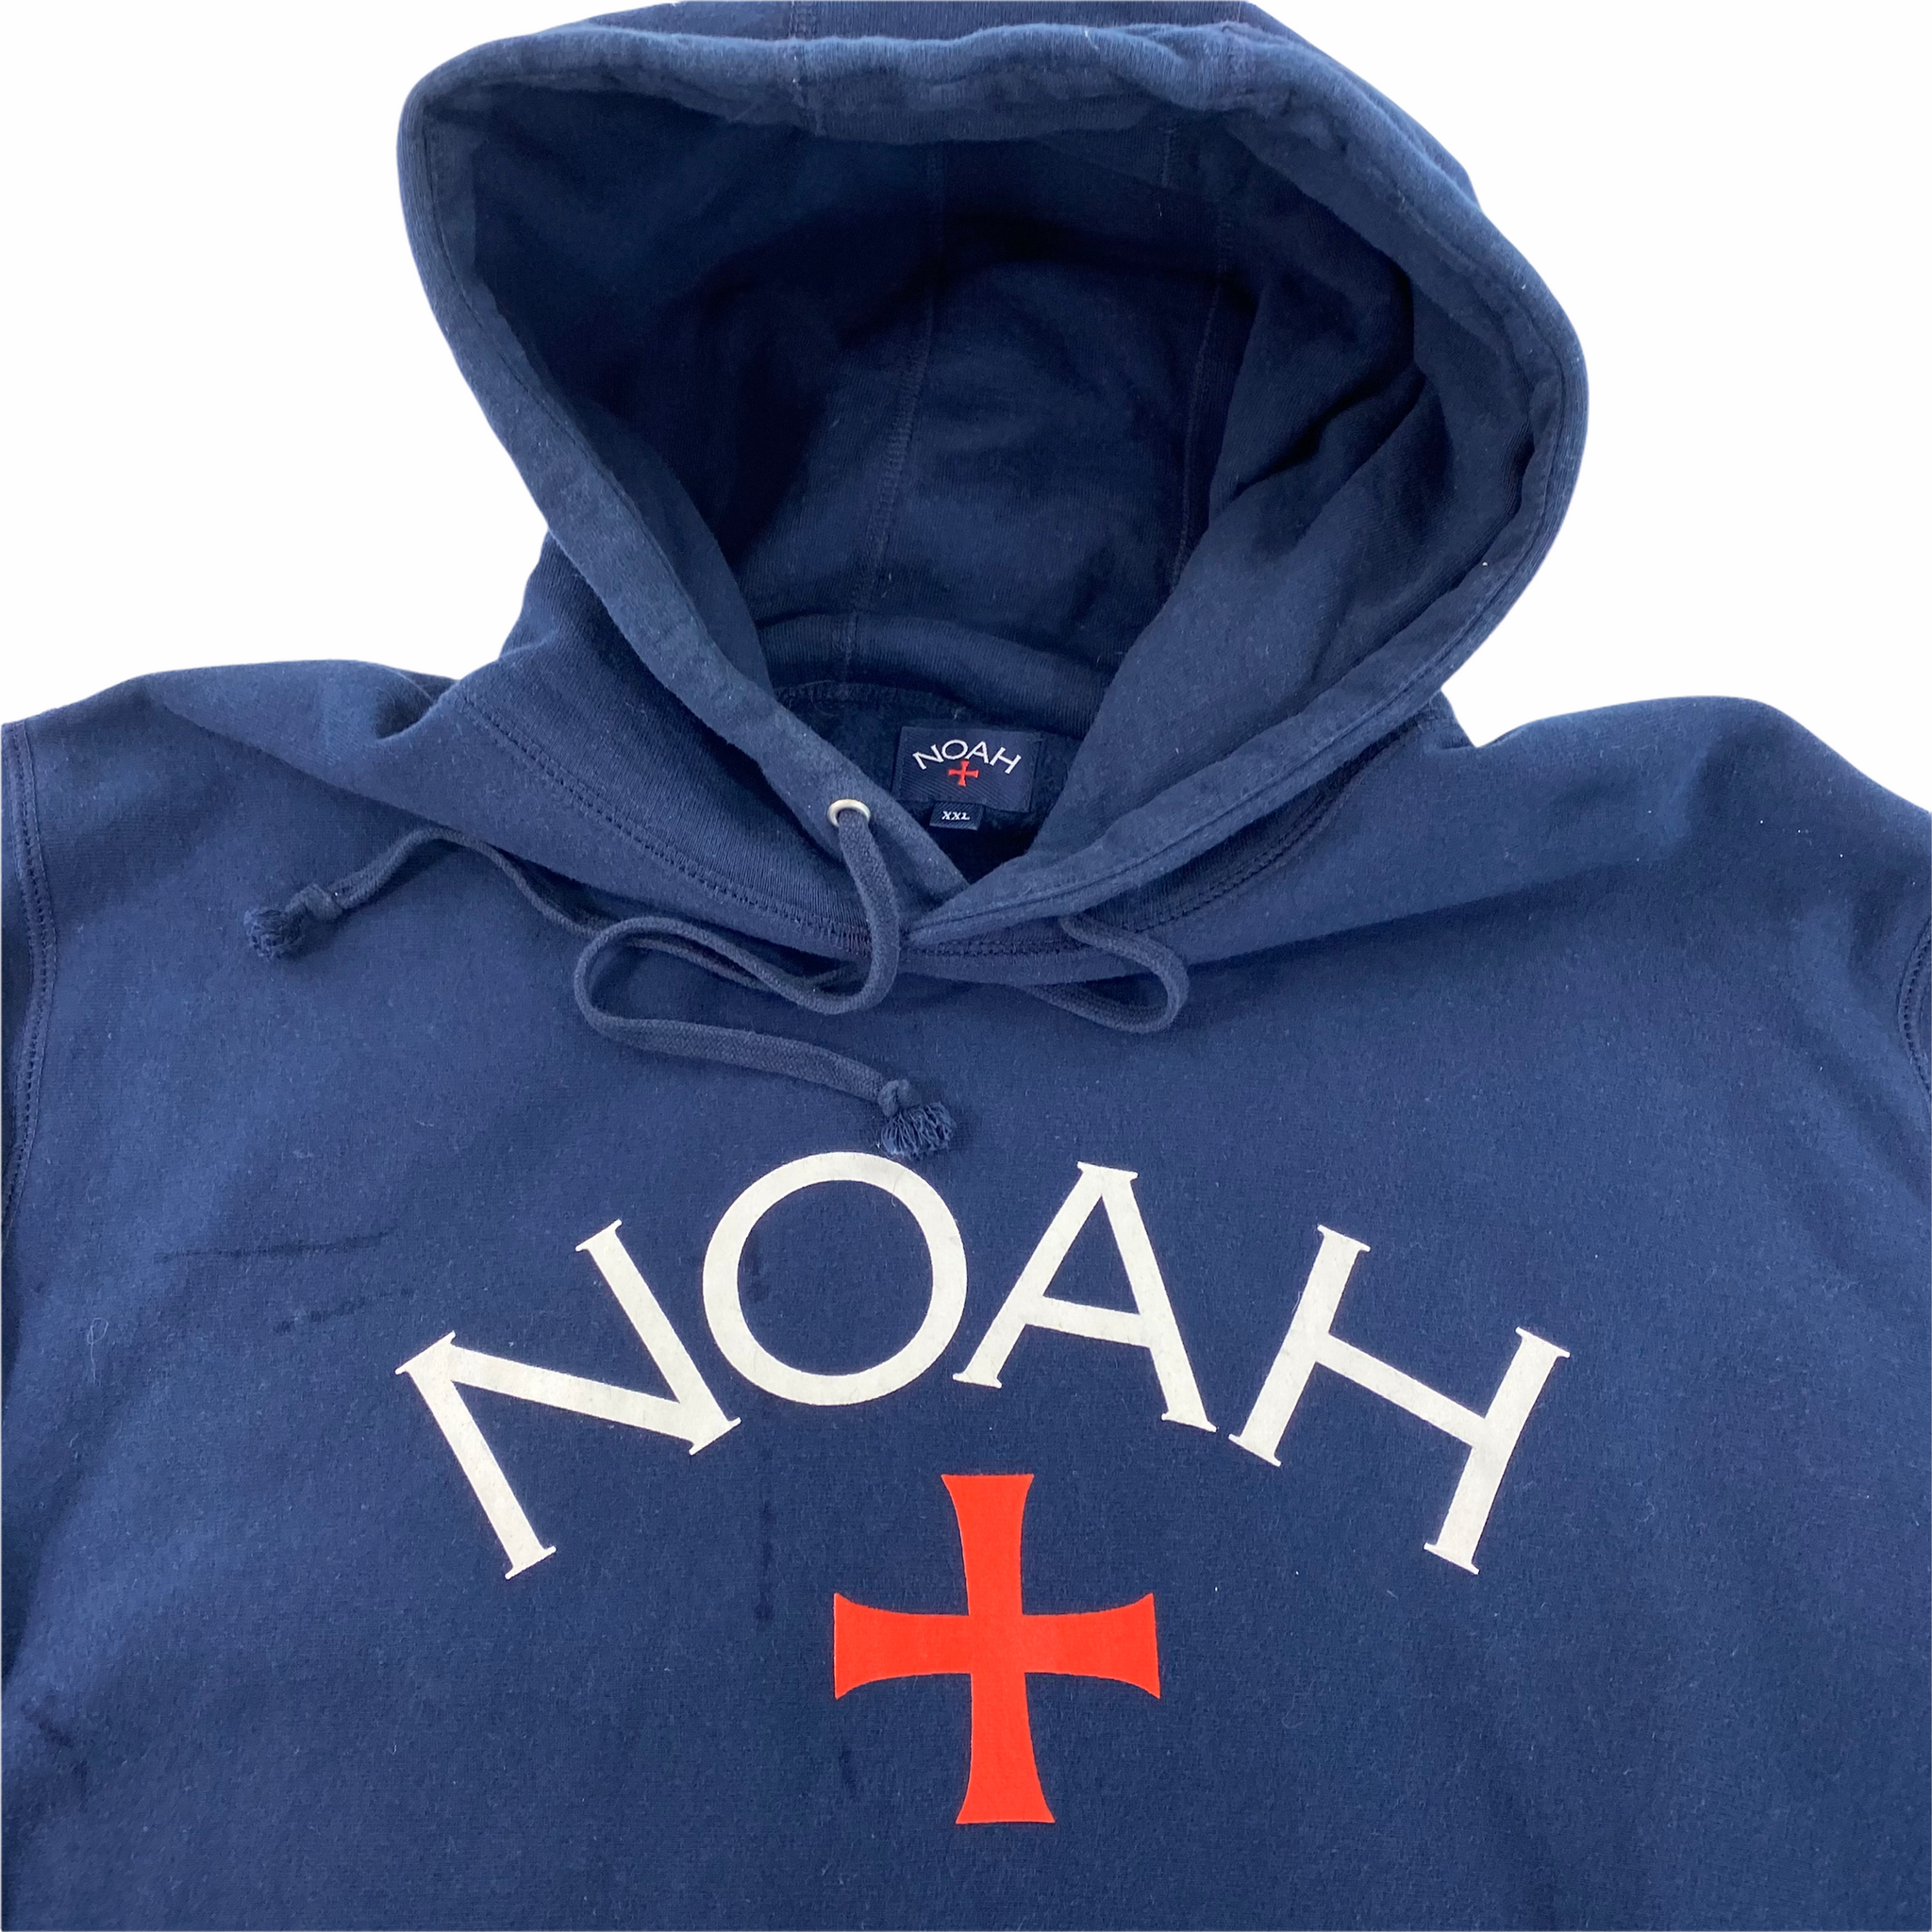 Noah core logo hood XXL